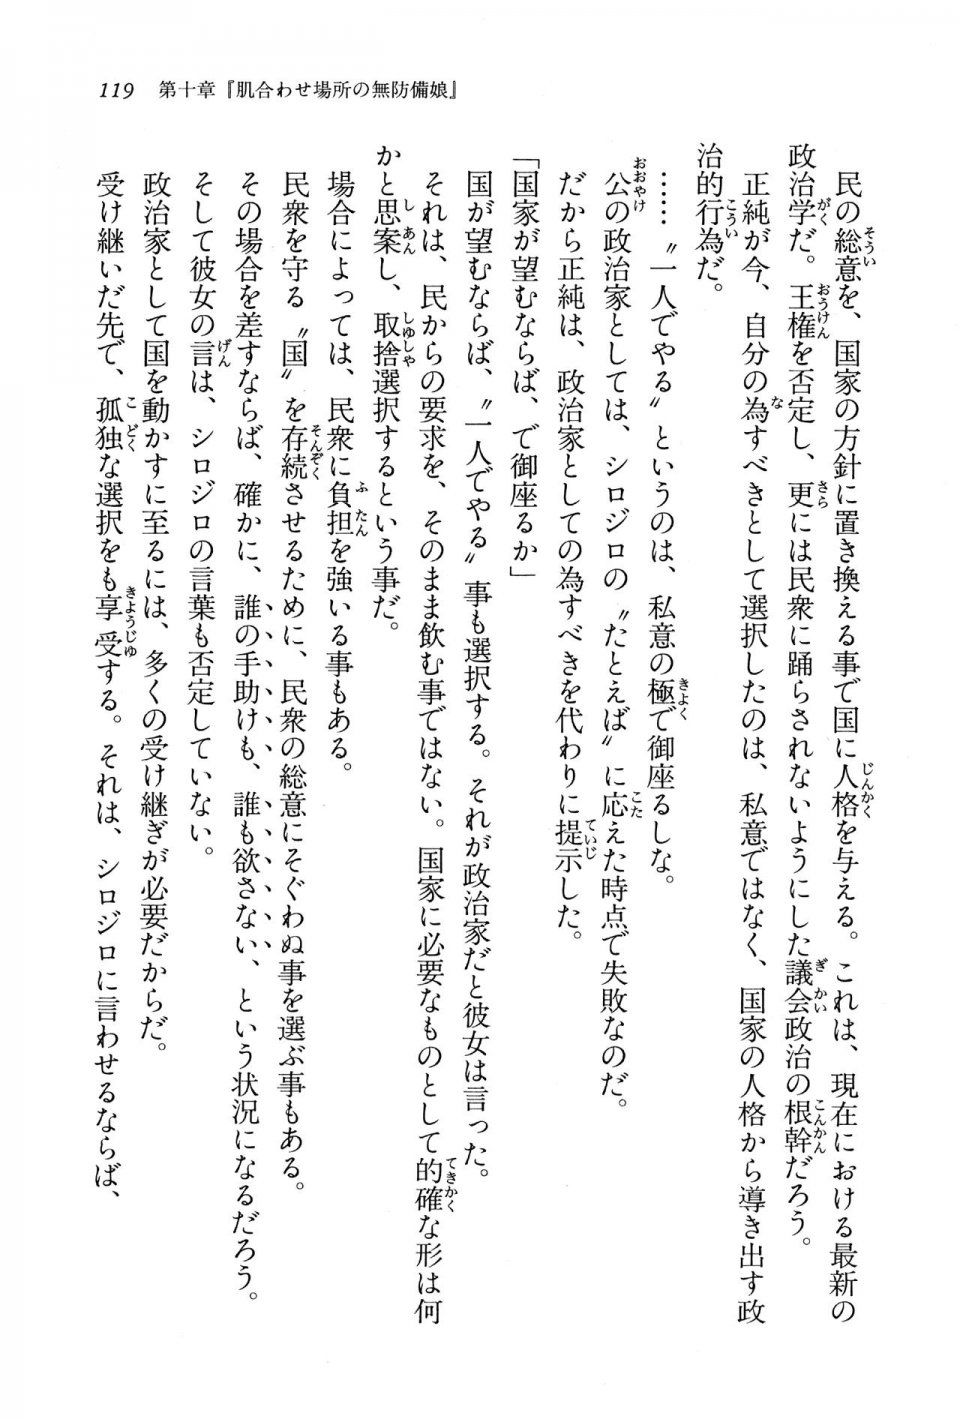 Kyoukai Senjou no Horizon BD Special Mininovel Vol 8(4B) - Photo #123